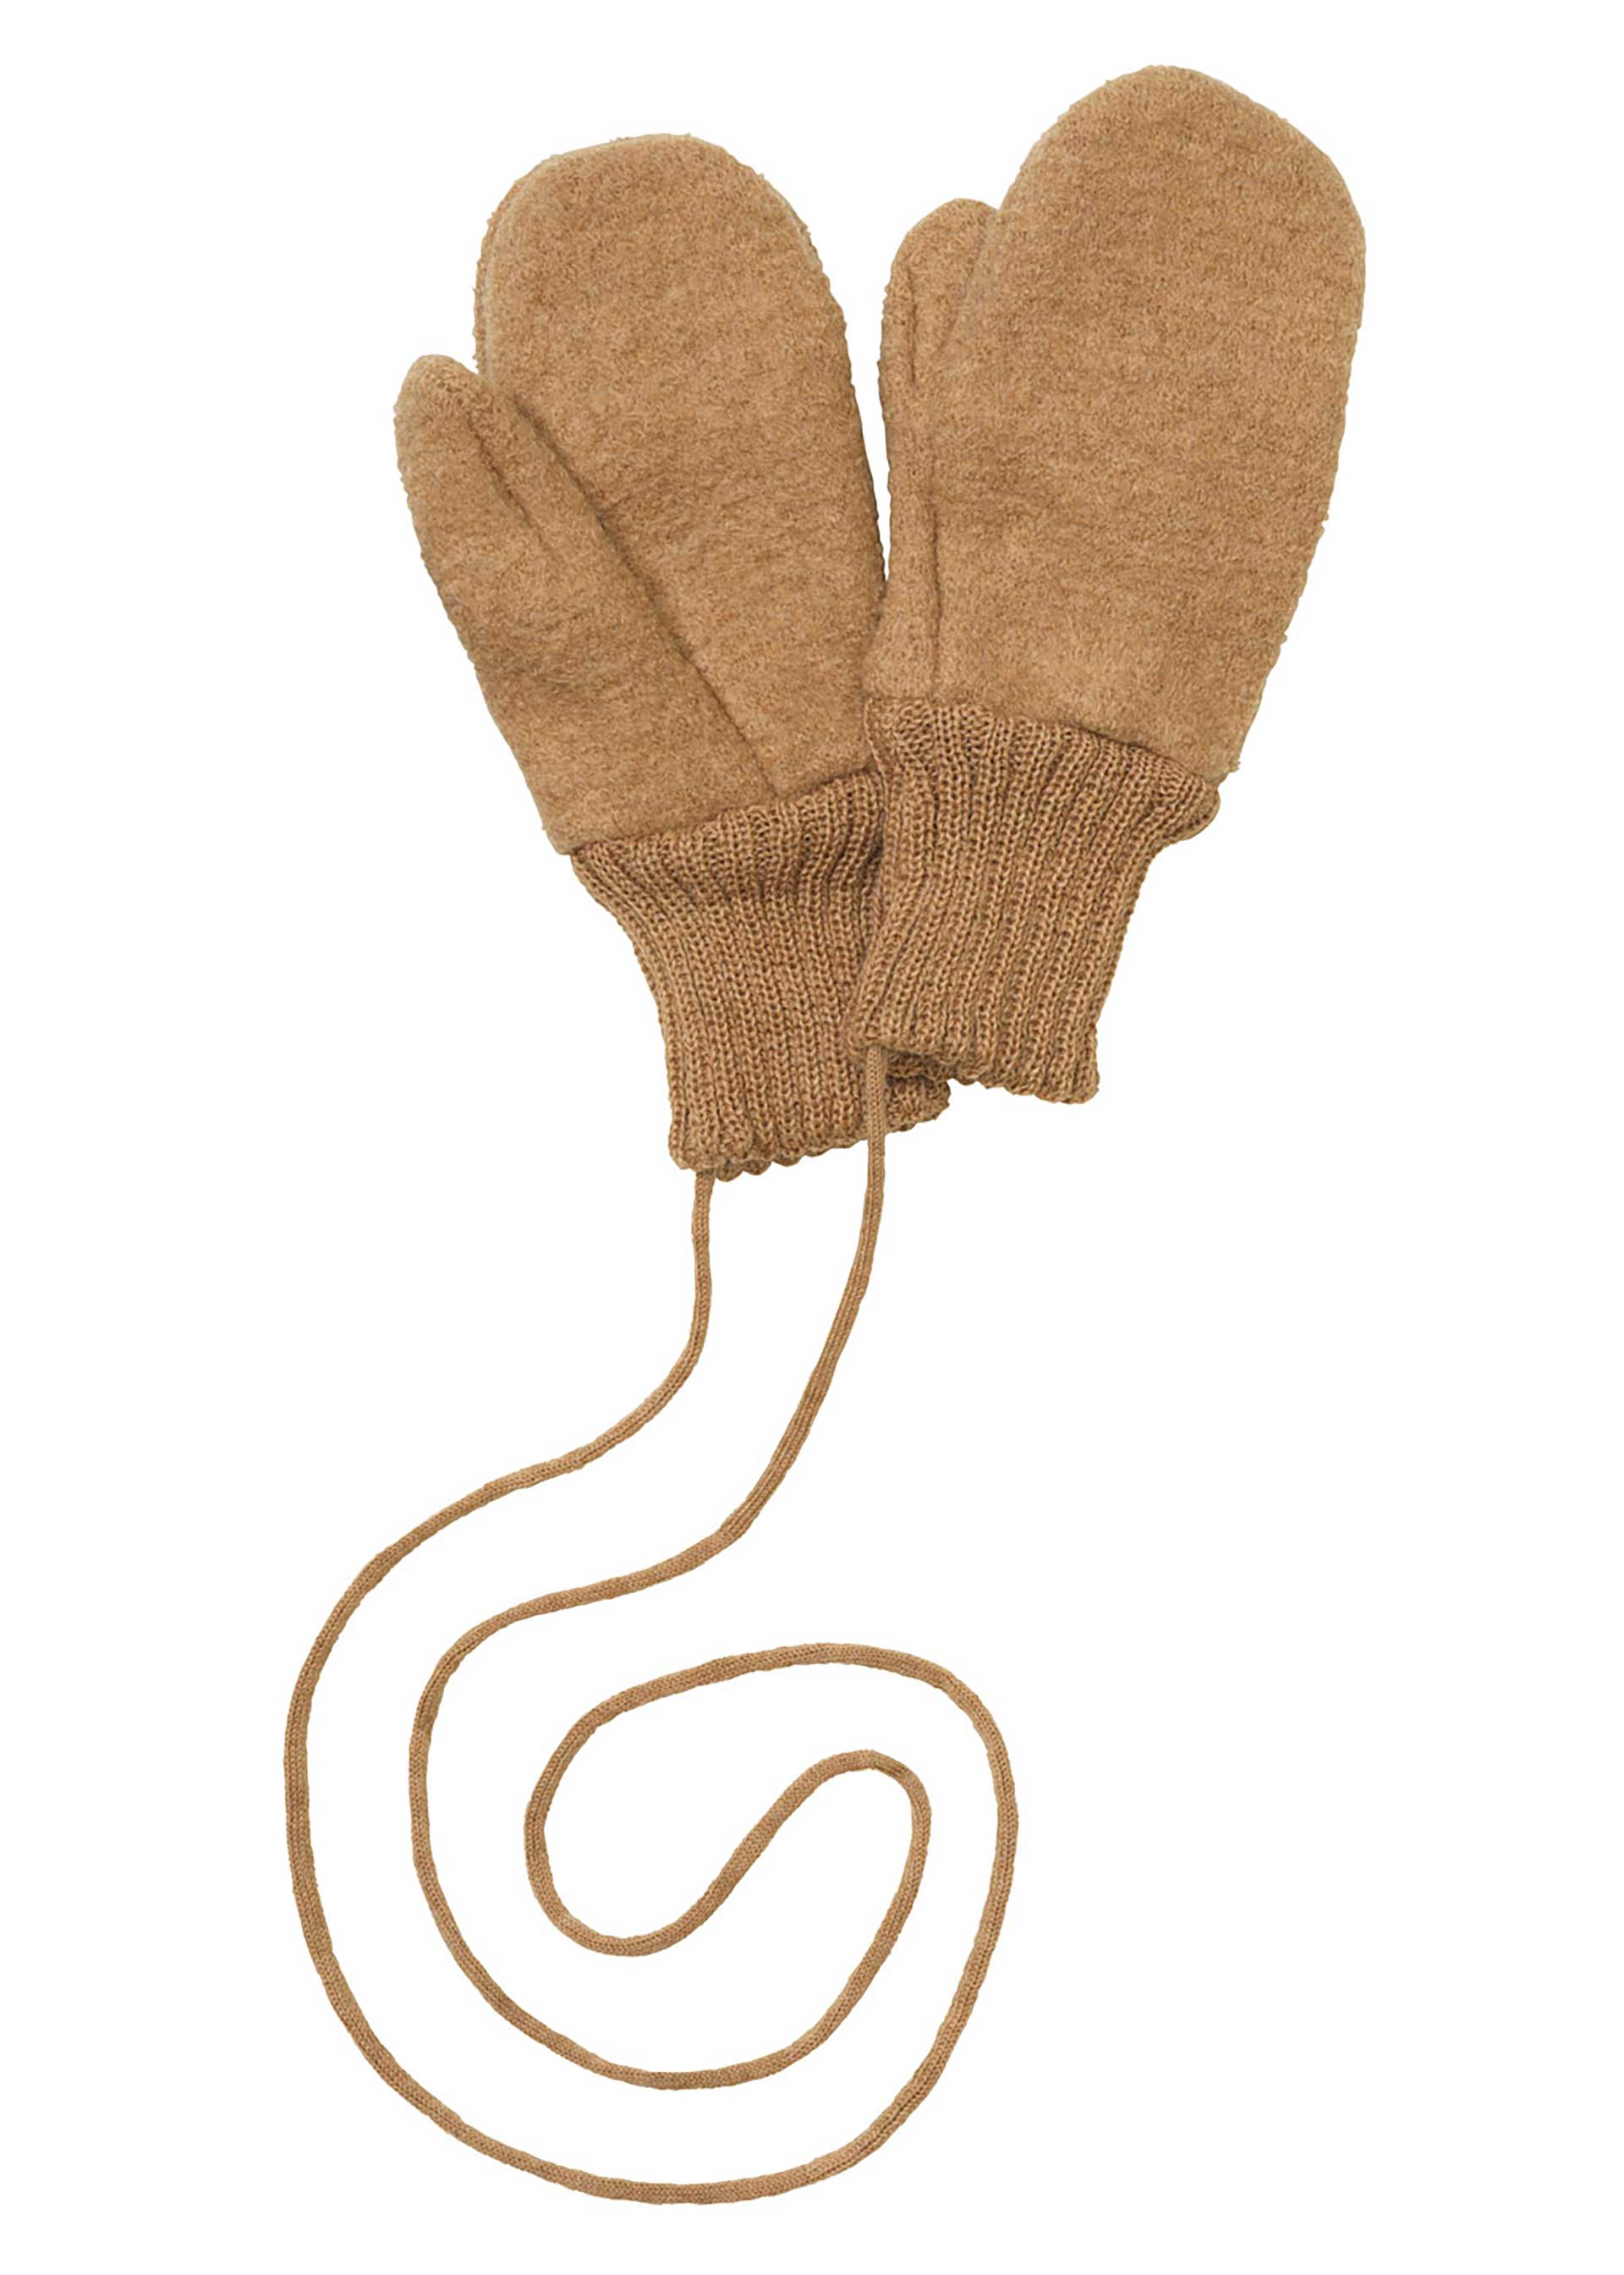 Walk-Handschuhe